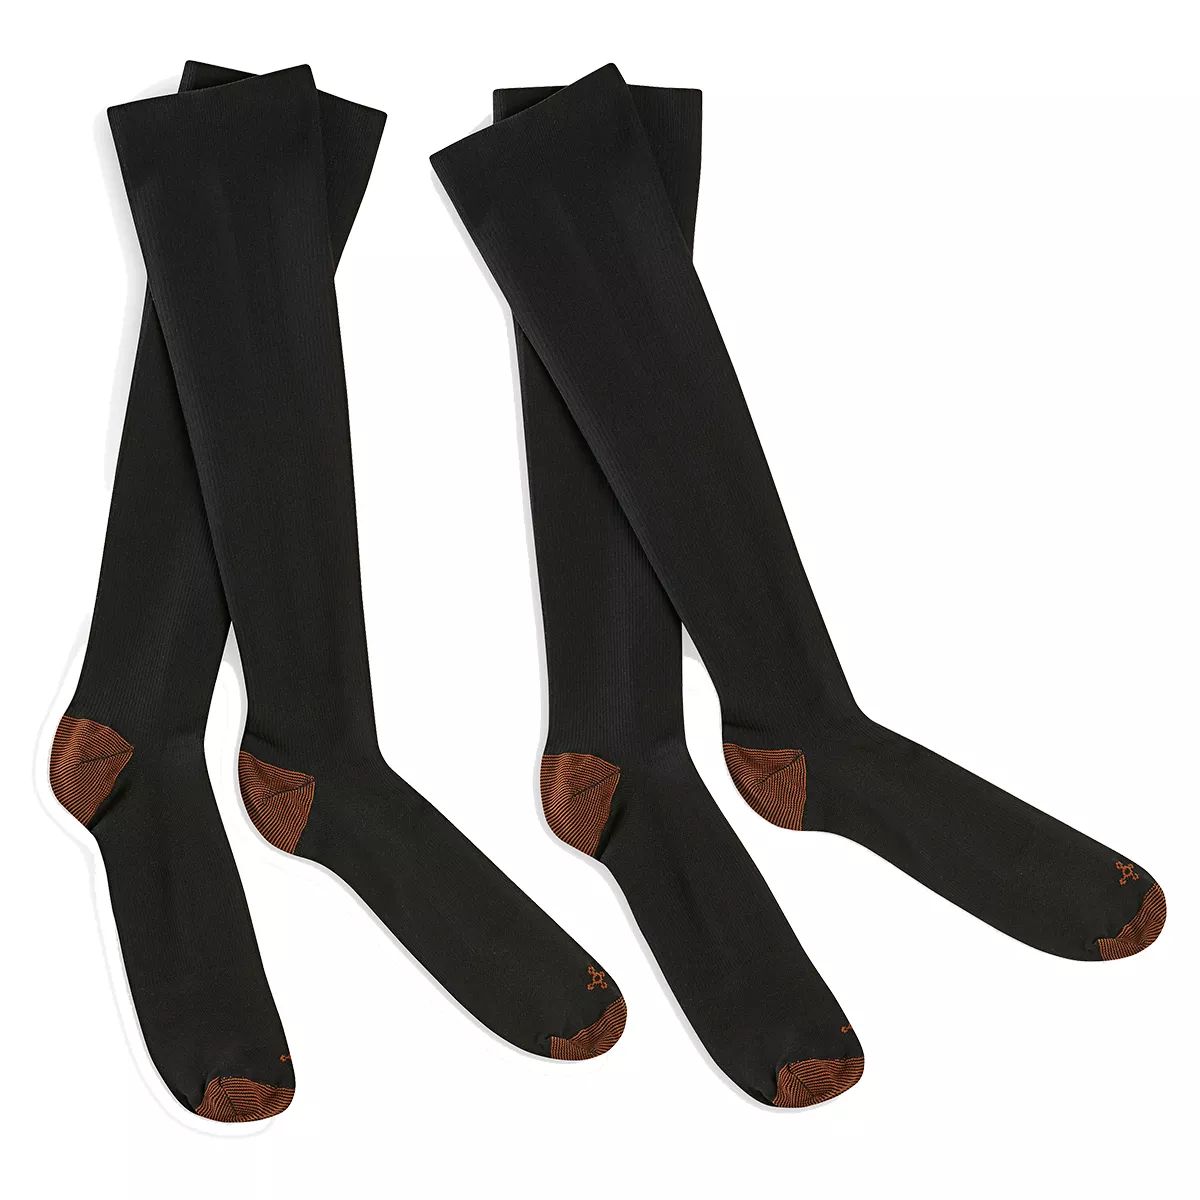 Image of Tommie Copper Compression Socks 2 Pack - Black